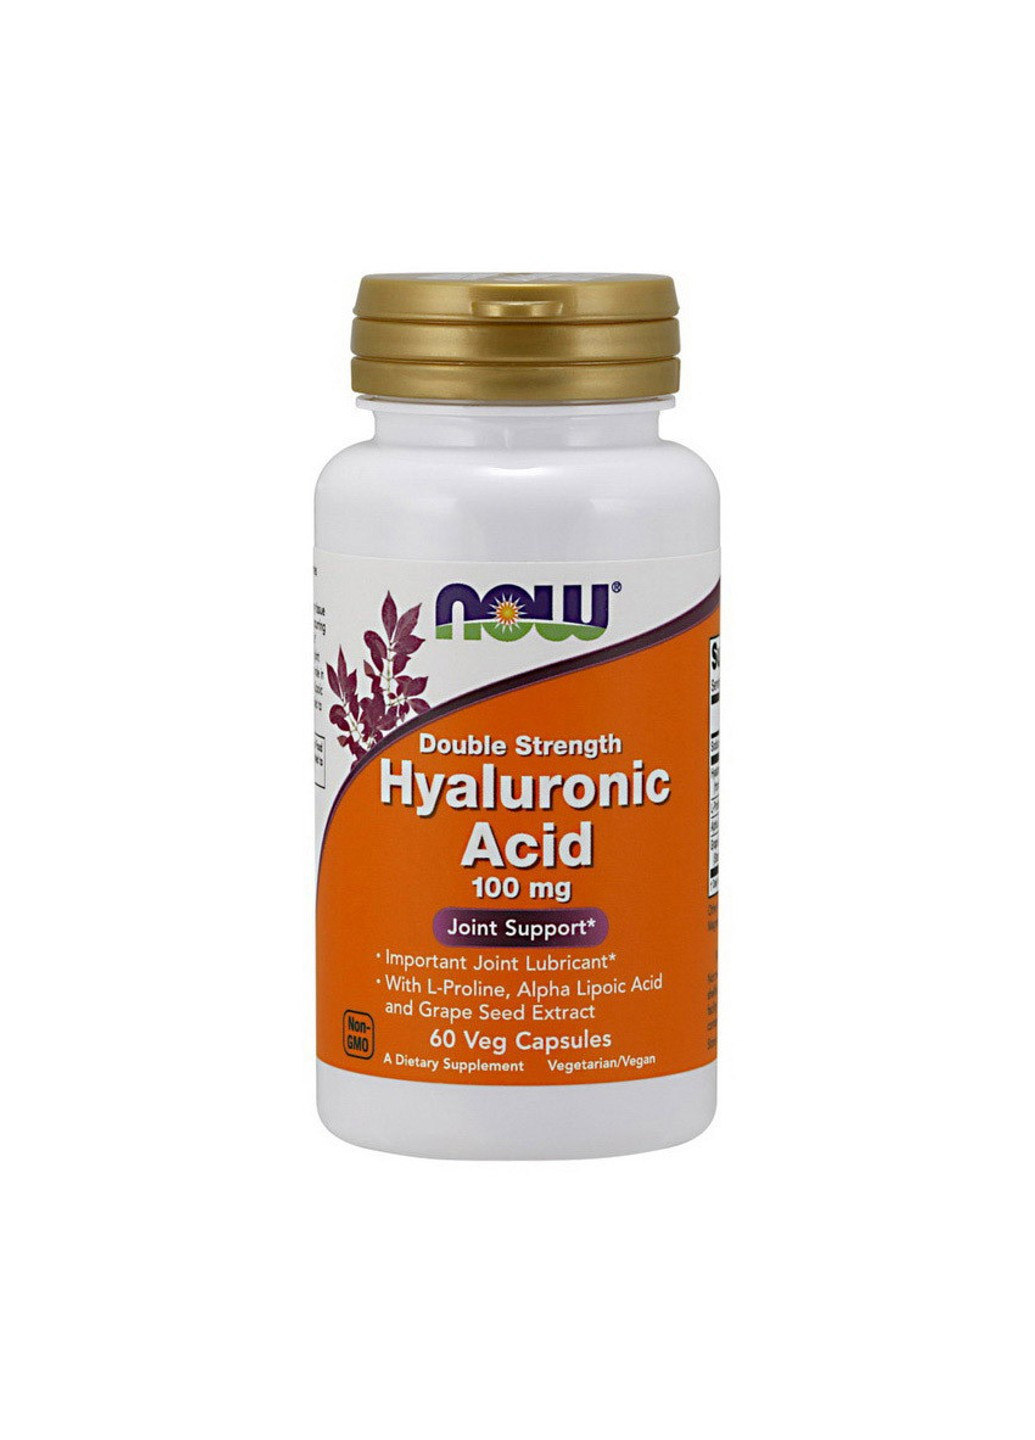 Гиалуроновая кислота Hyaluronic Acid 100 мг (60 капсул) нау фудс Now Foods (255410365)